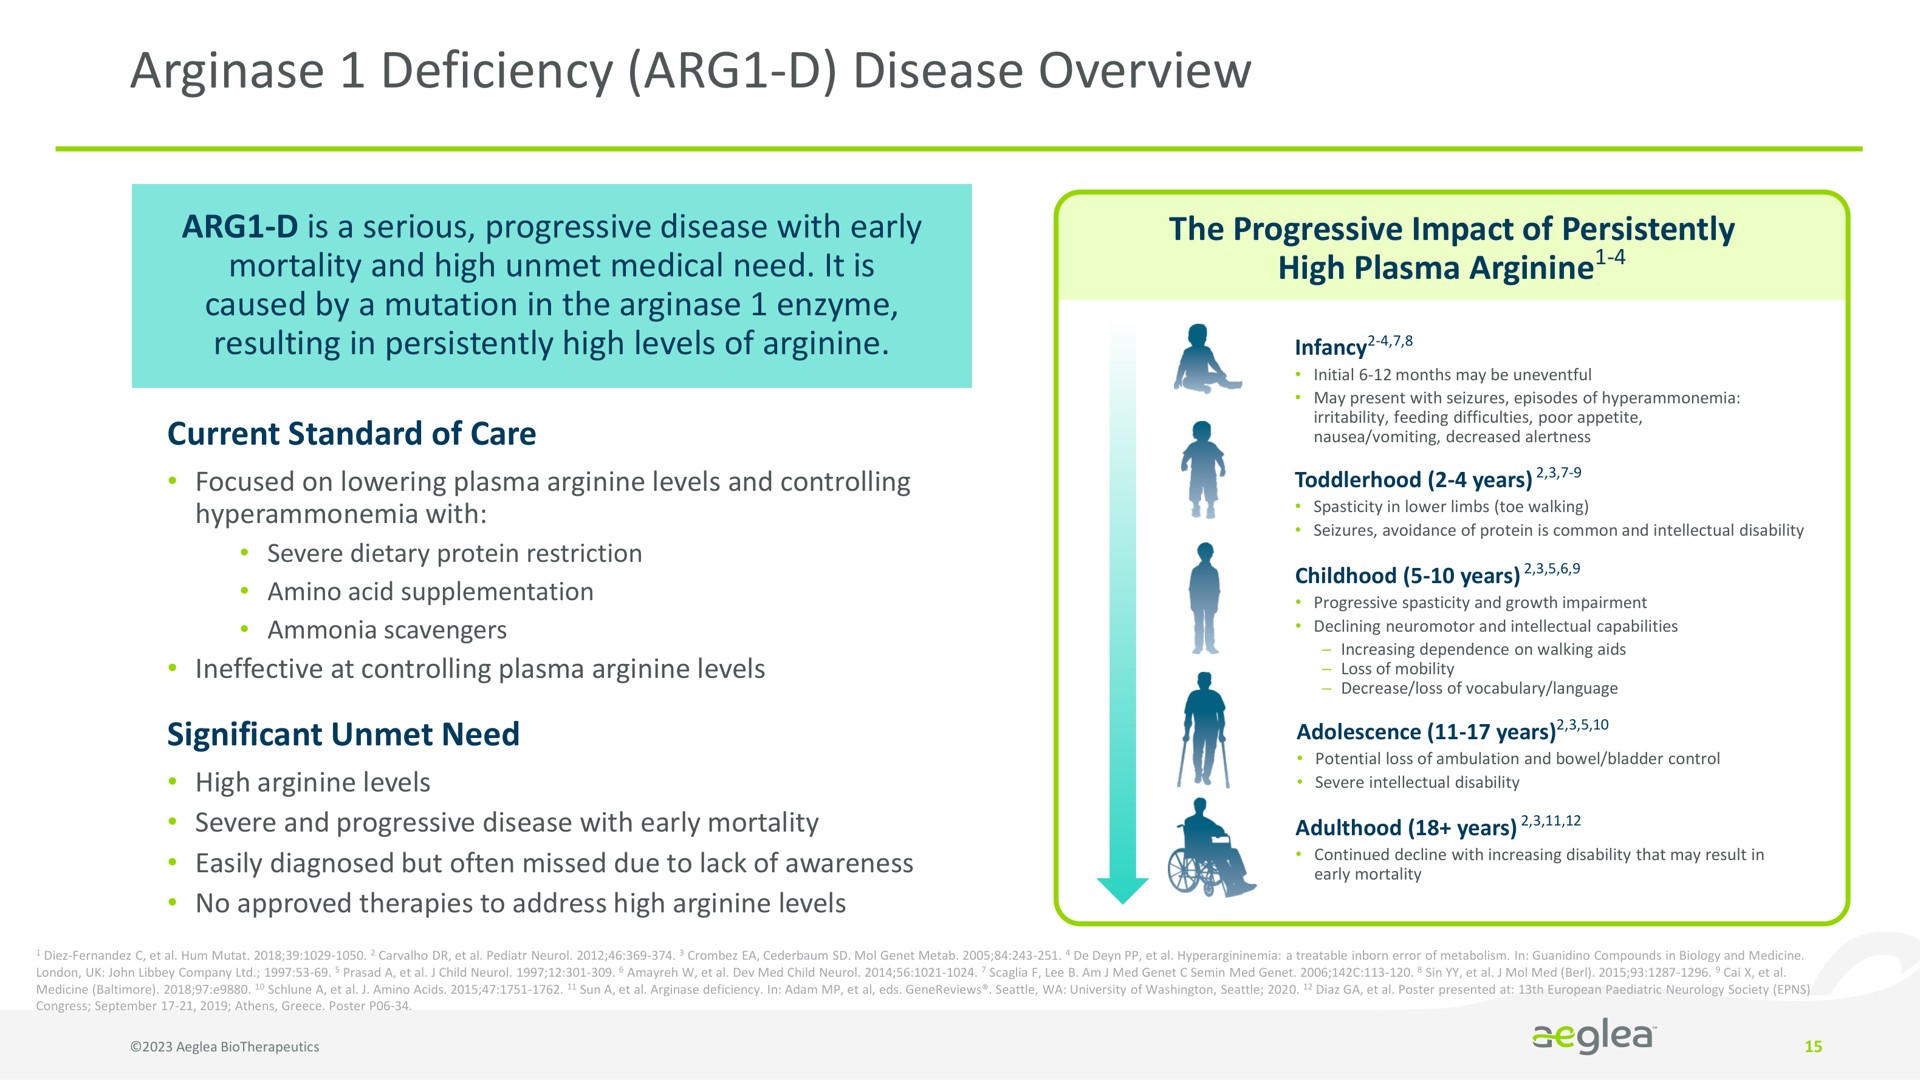 deficiency disease overview | Aeglea BioTherapeutics